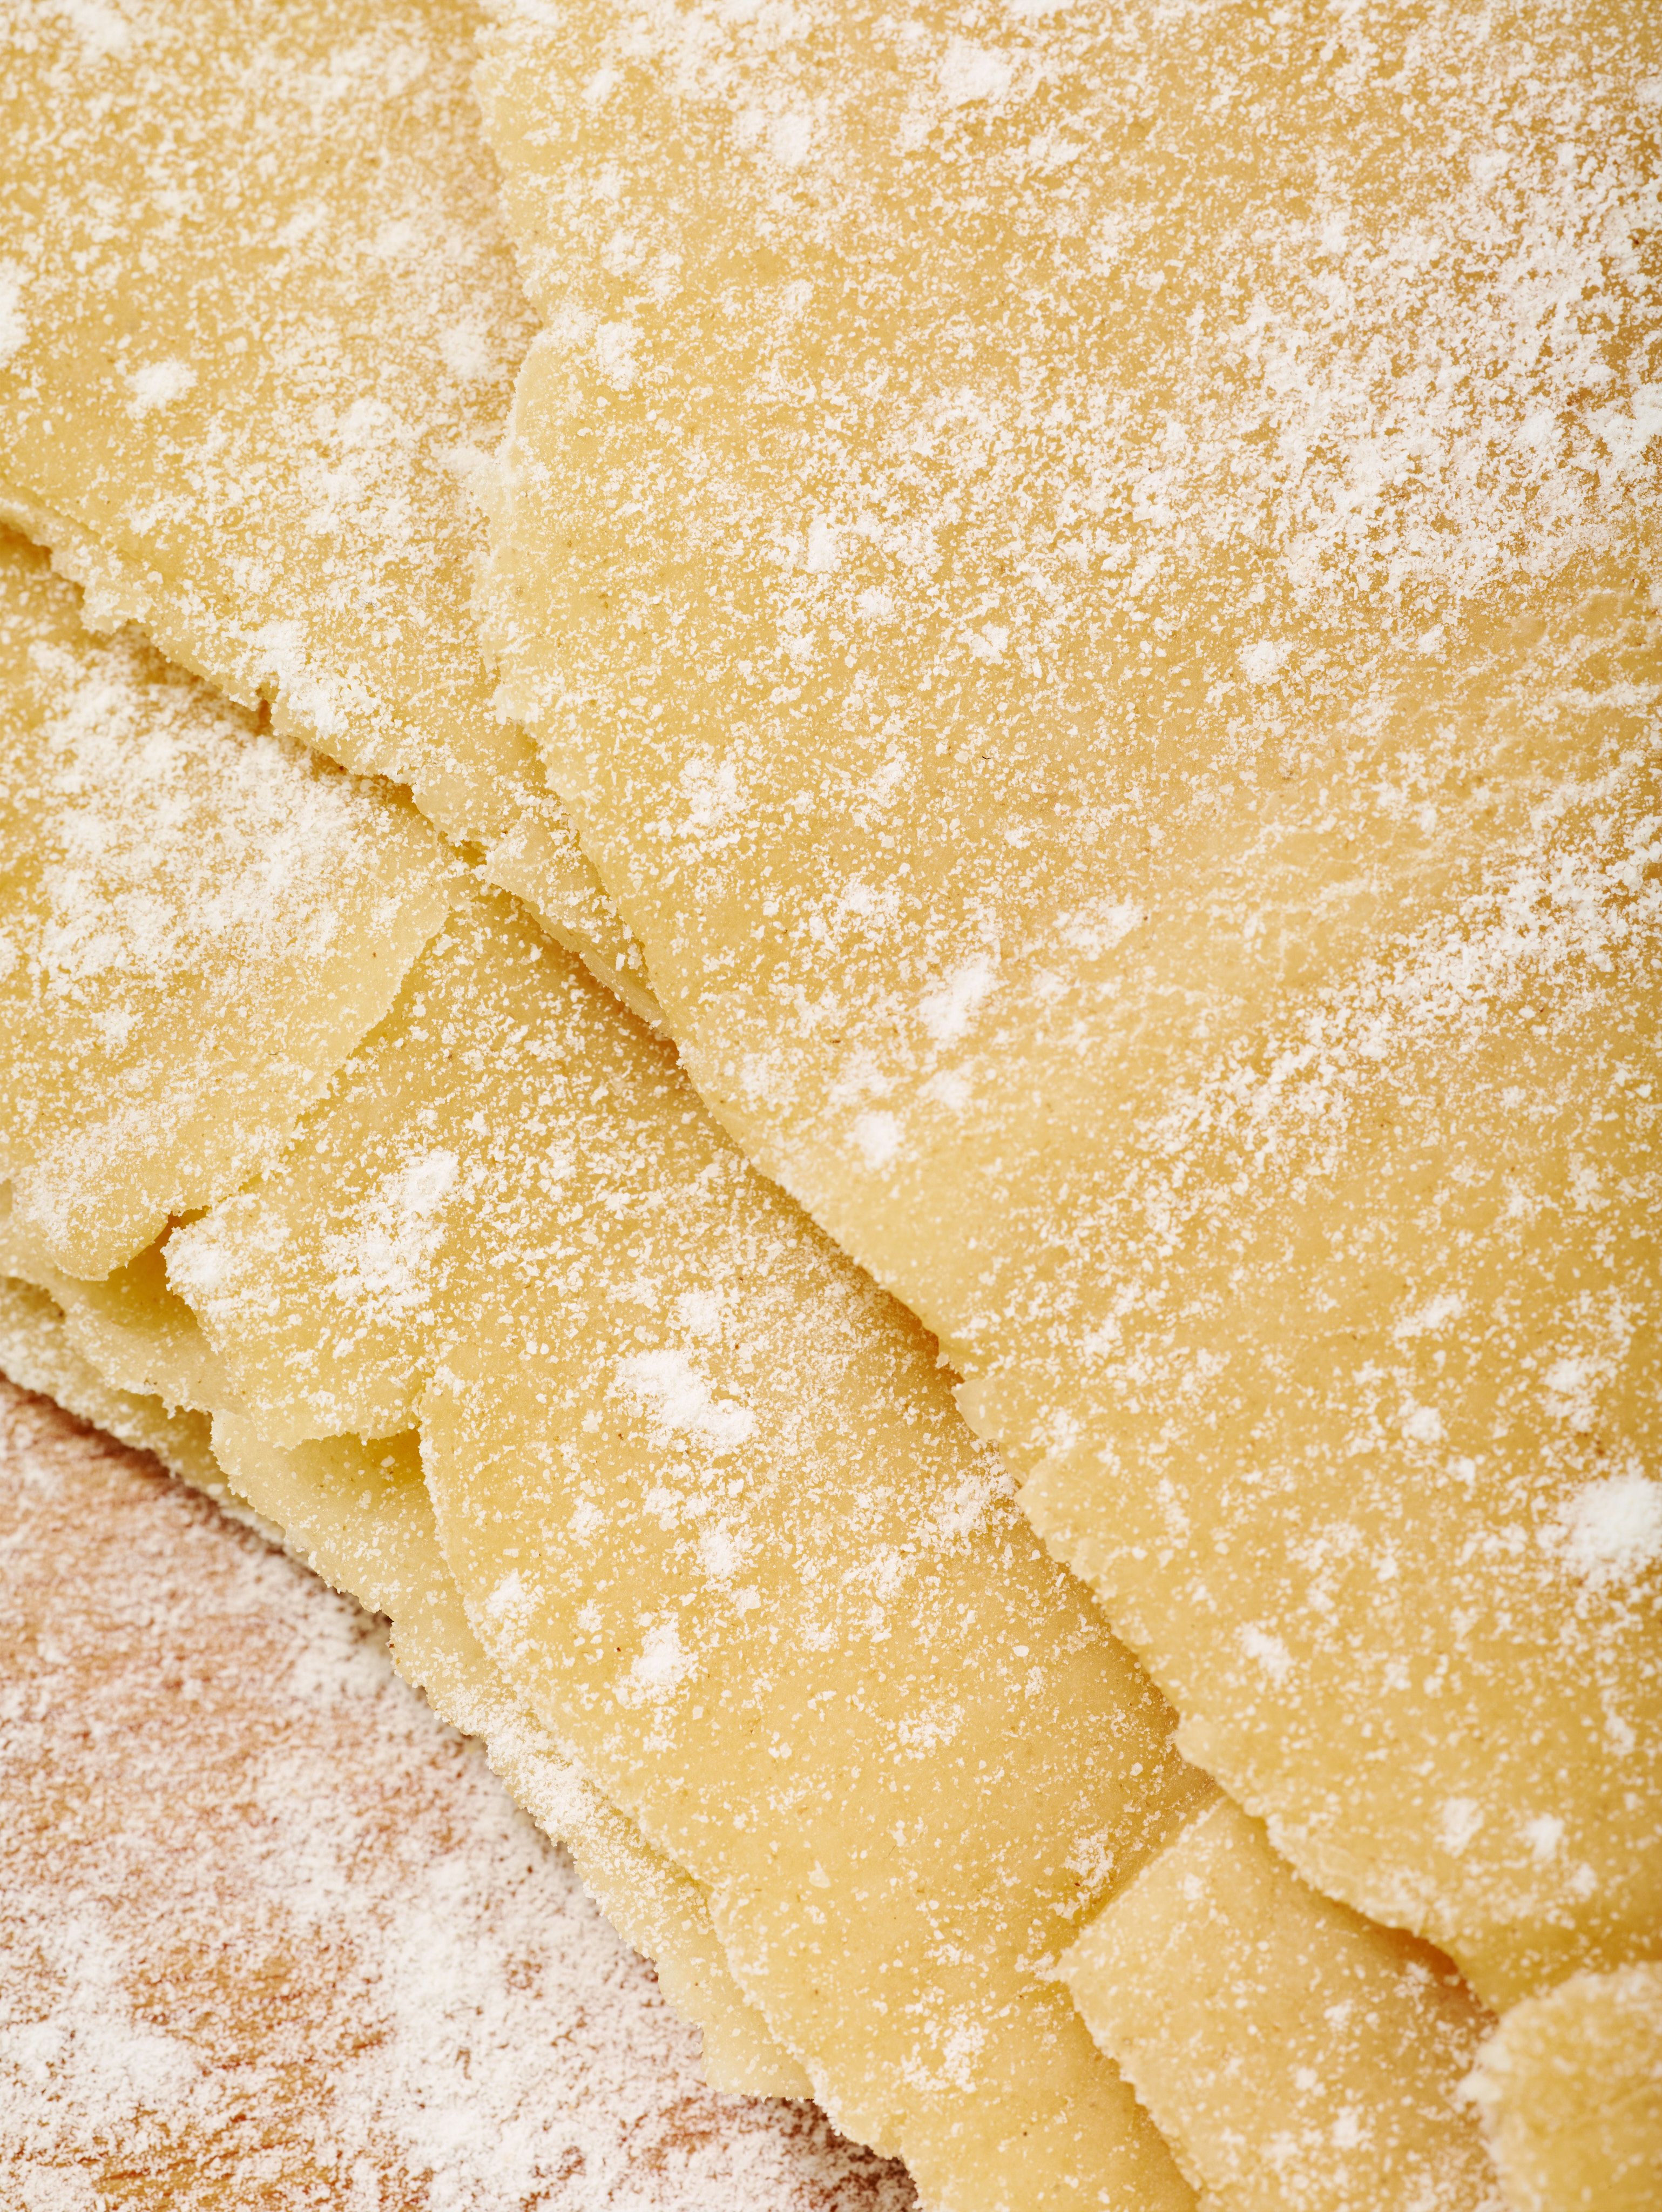 Flour coated sheets of pasta dough